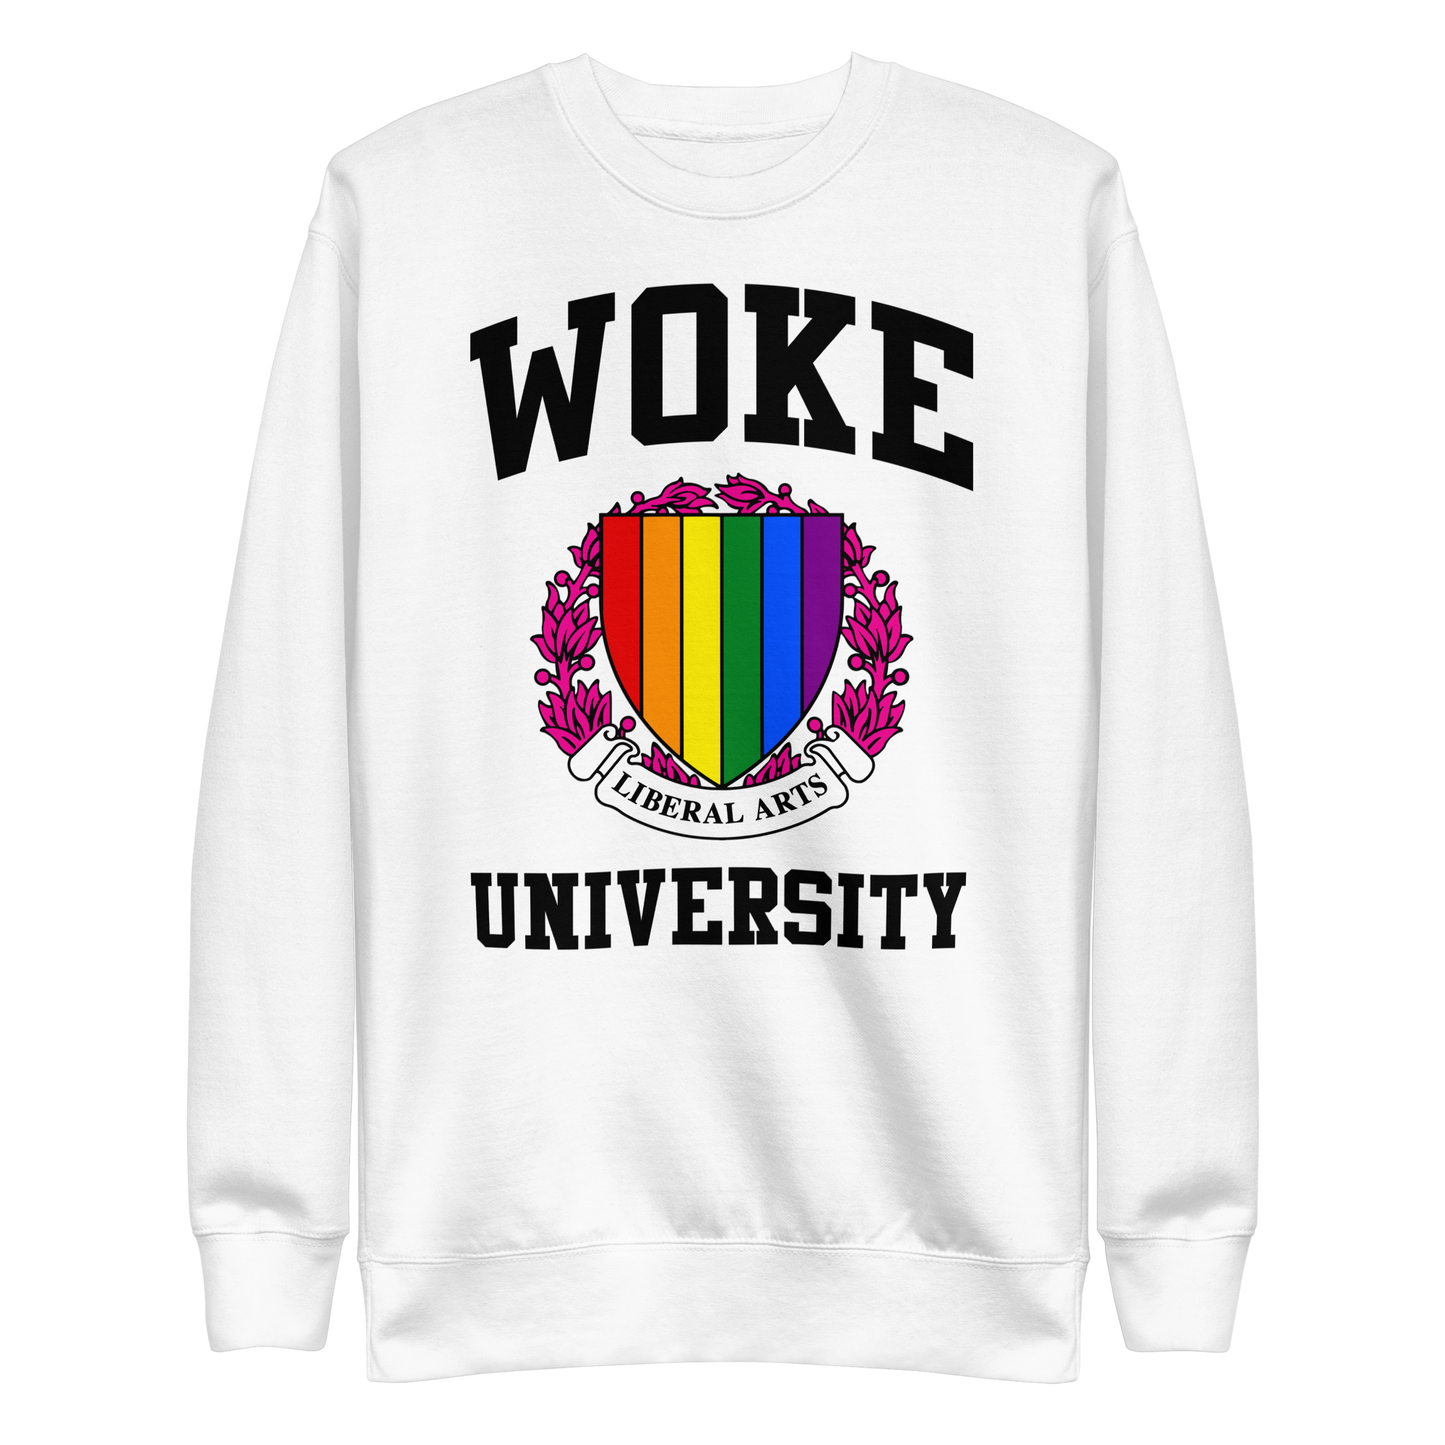 Woke University Crewneck.